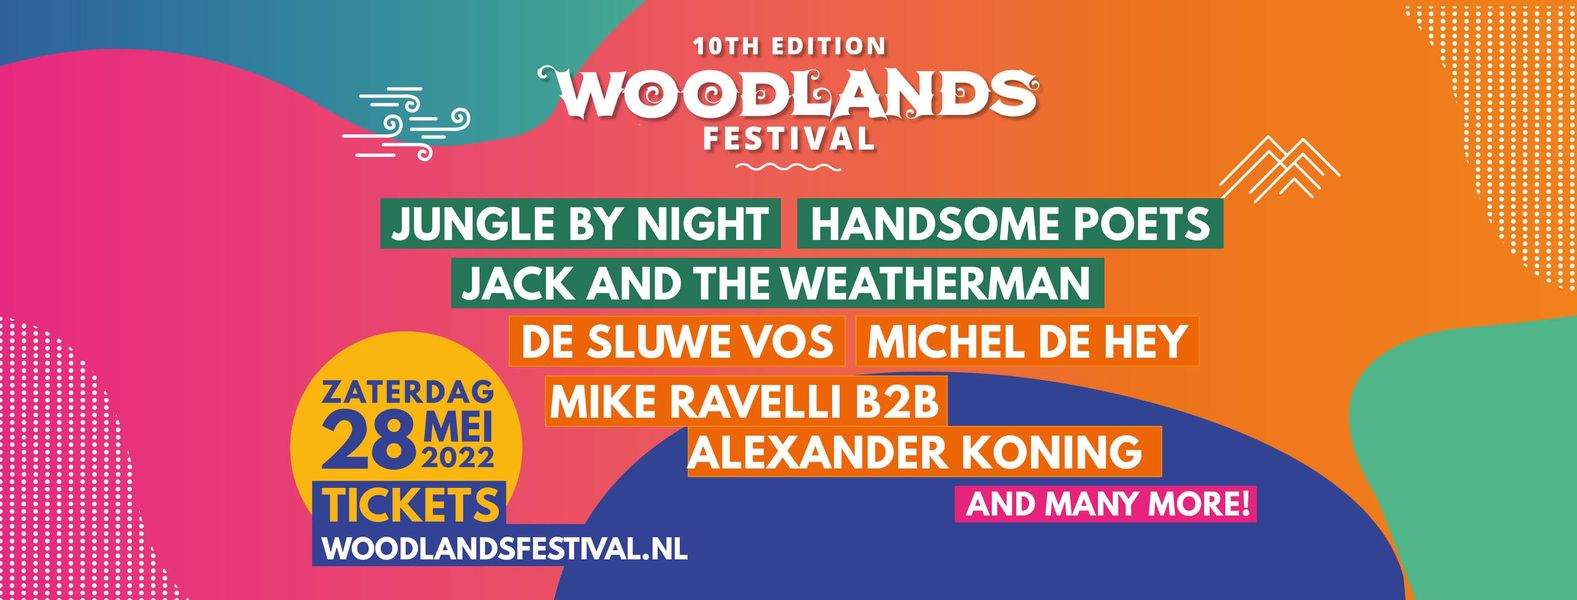 Woodlands Festival - フライヤー表